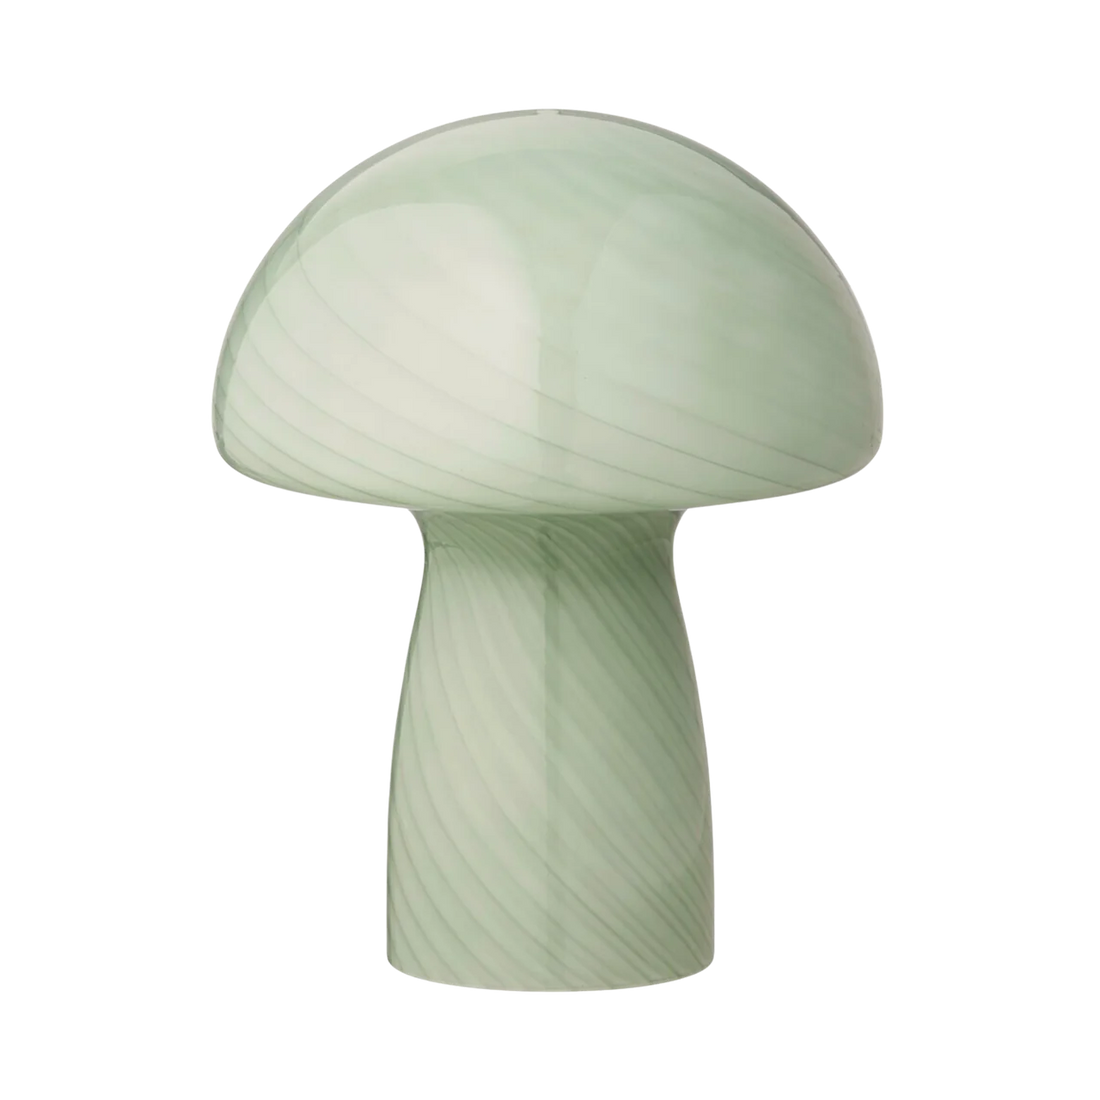 Bahne - Svampelampe / Mushroom bordlampe, mint - H23 cm.